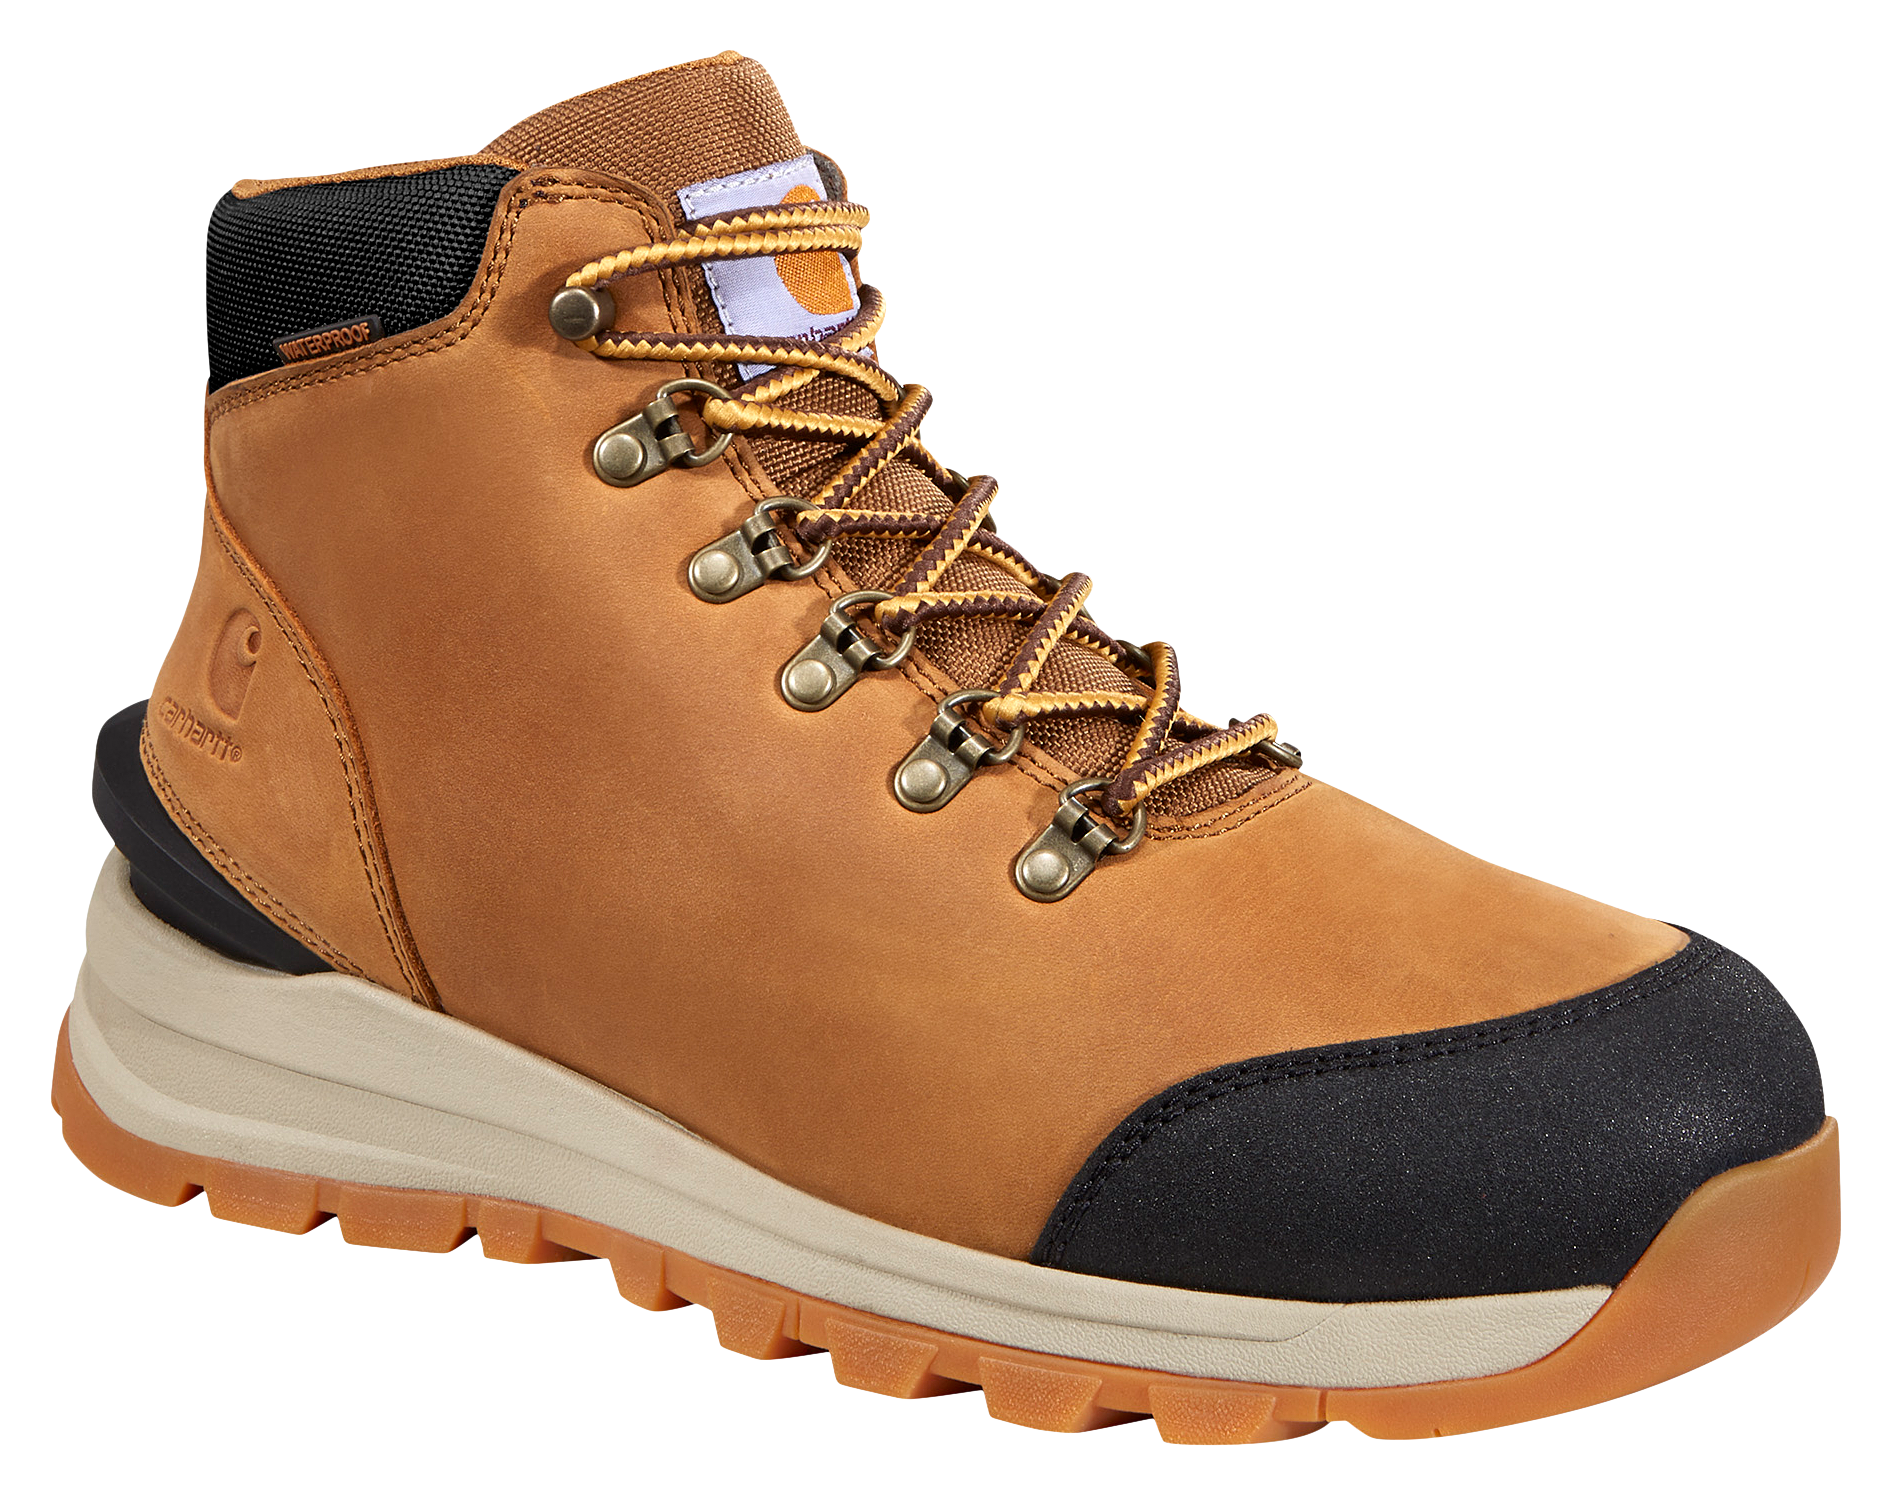 Carhartt Gilmore Waterproof Hiking Boots for Men - Brown - 10W